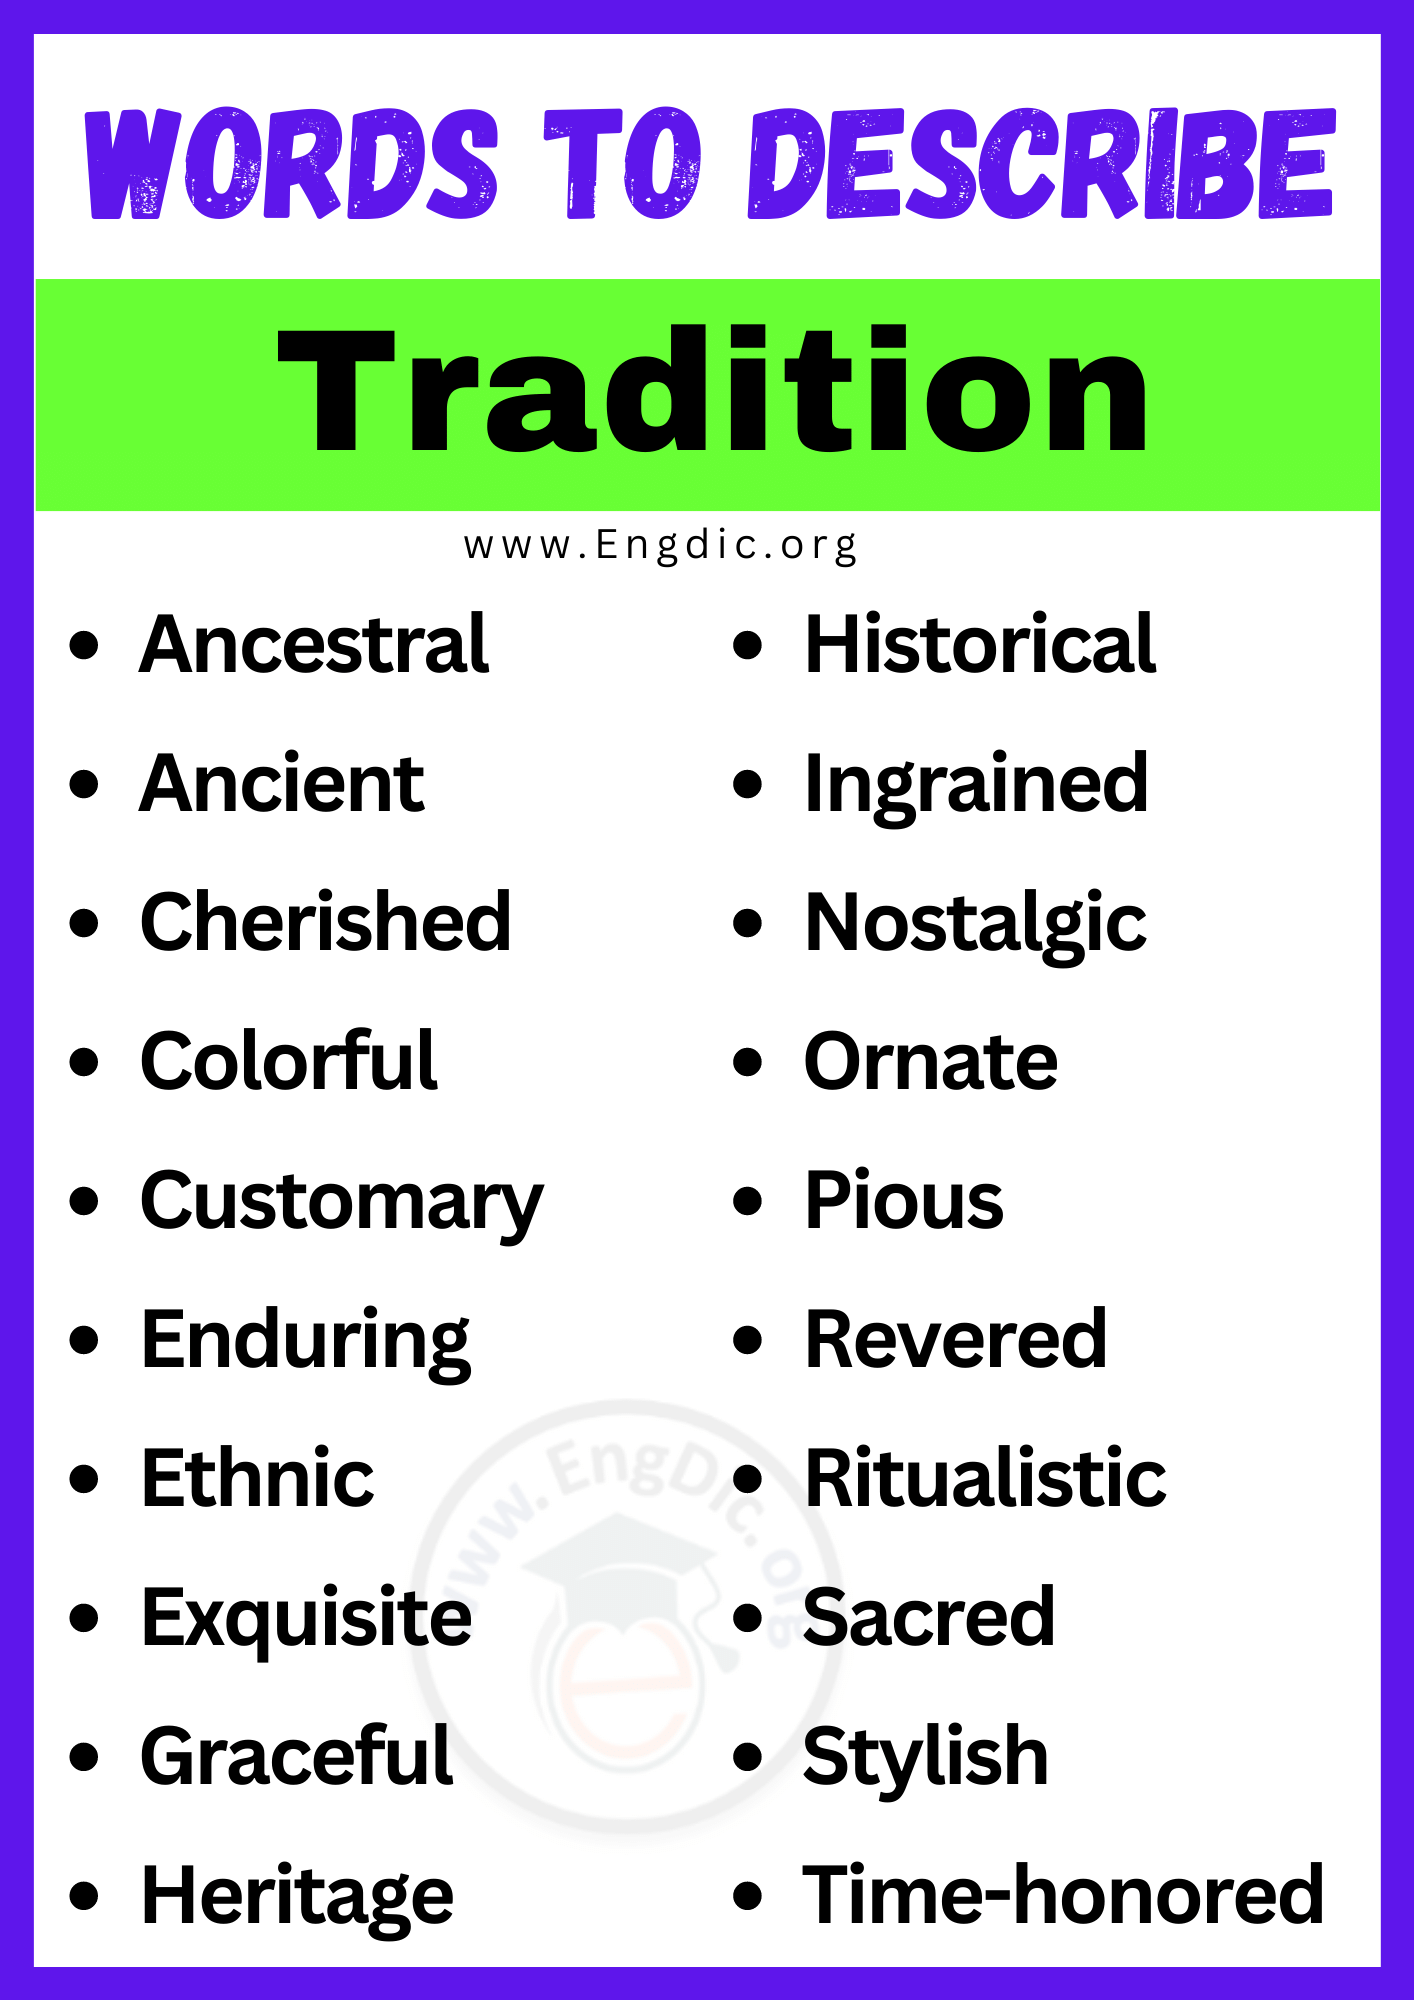 Words to Describe Tradition